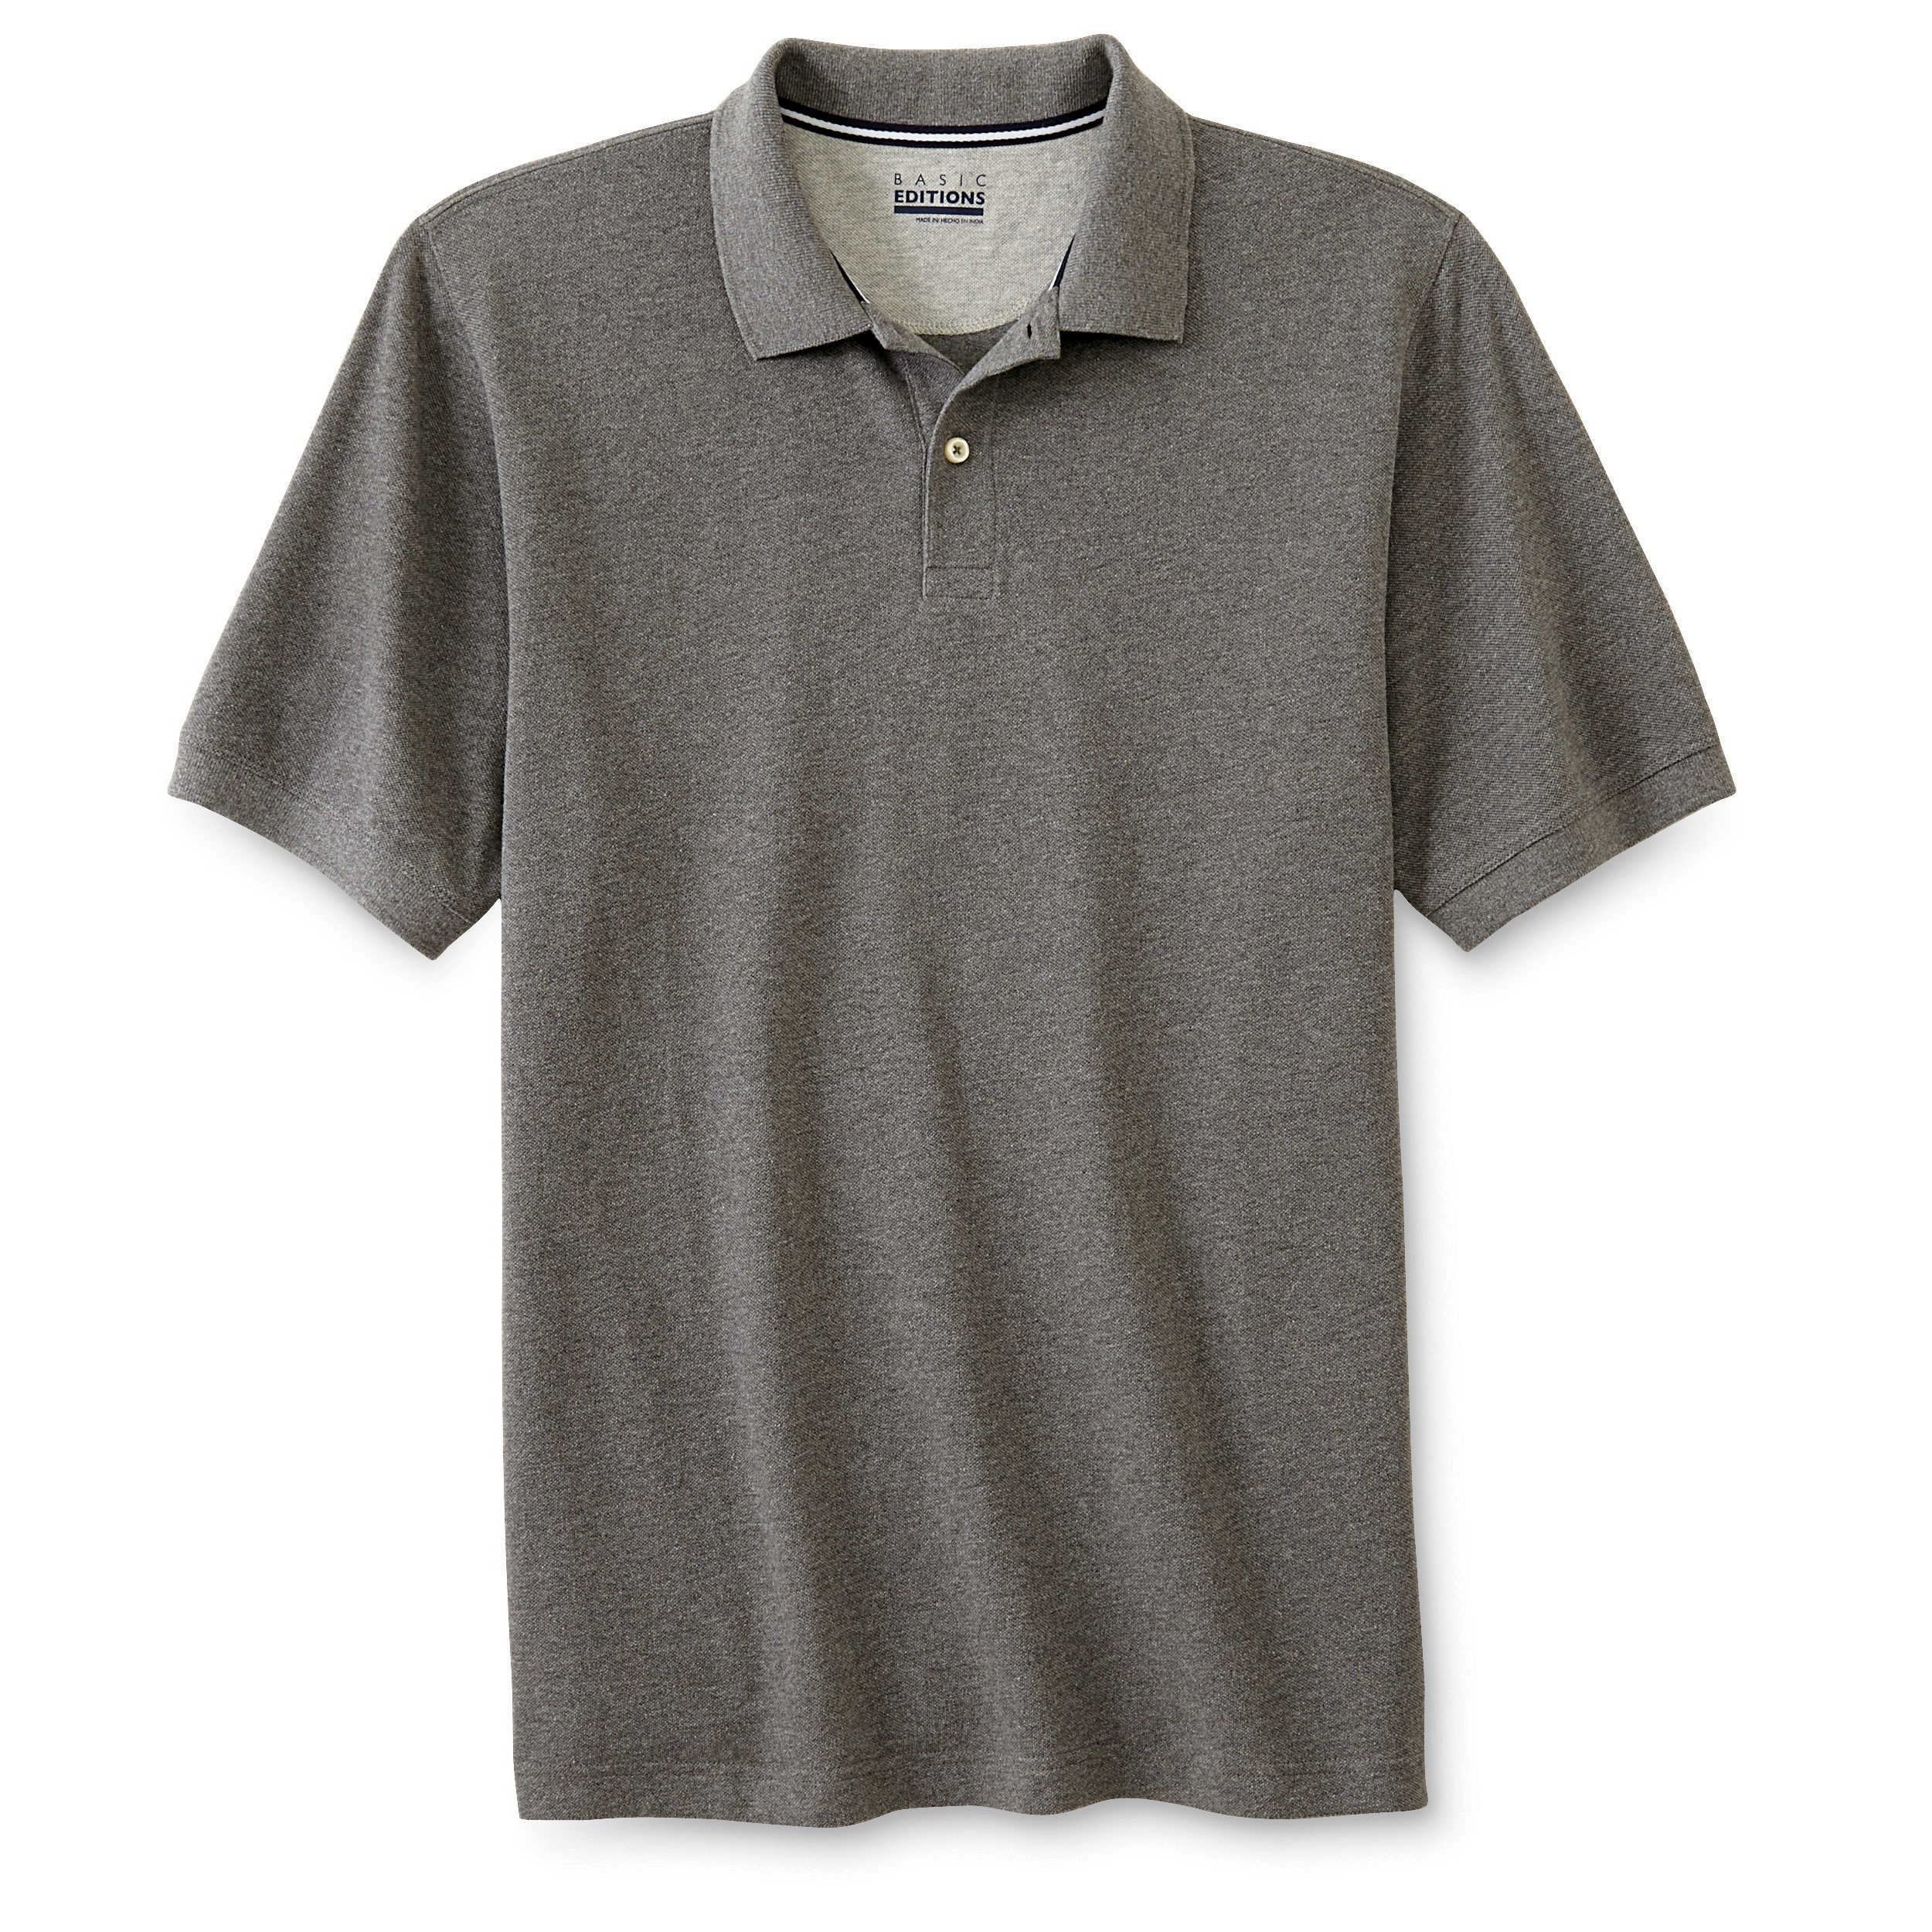 Basic Editions Men's Big & Tall Pique Polo Shirt - Heathered